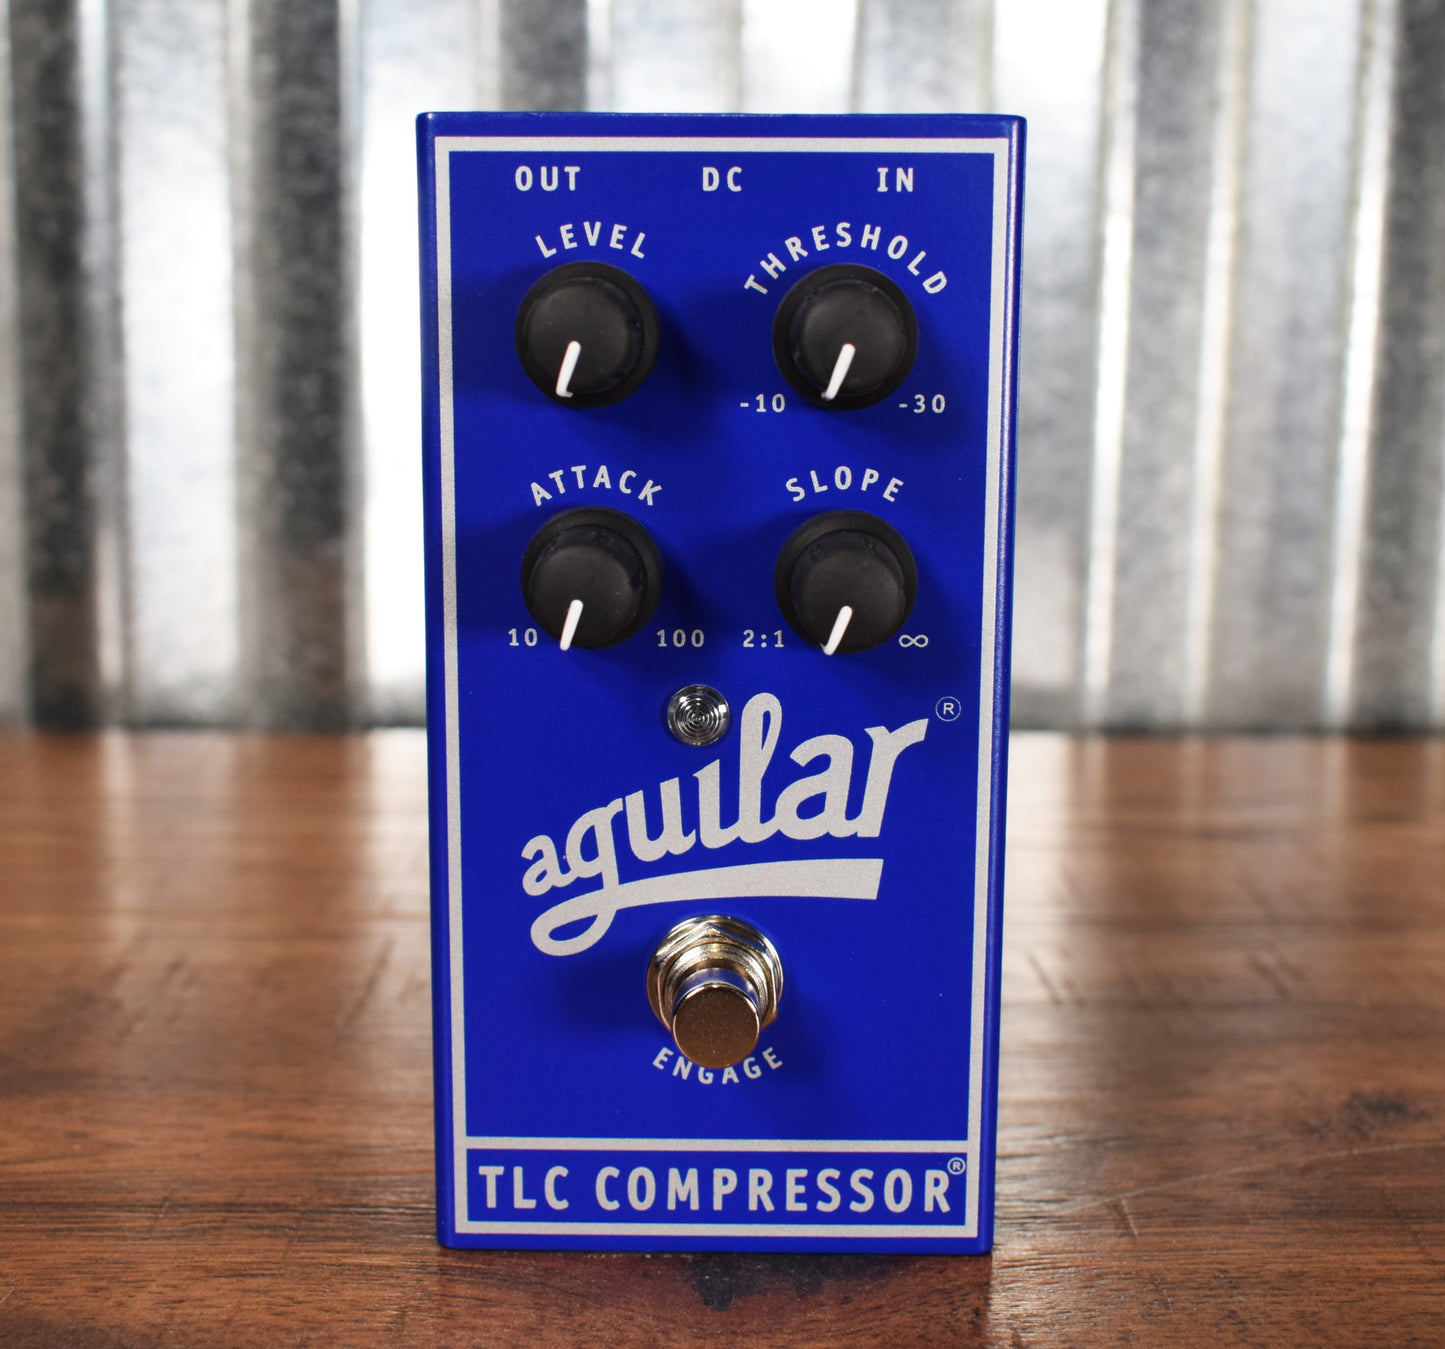 Aguilar TLC Compressor Bass Compression Effect Pedal